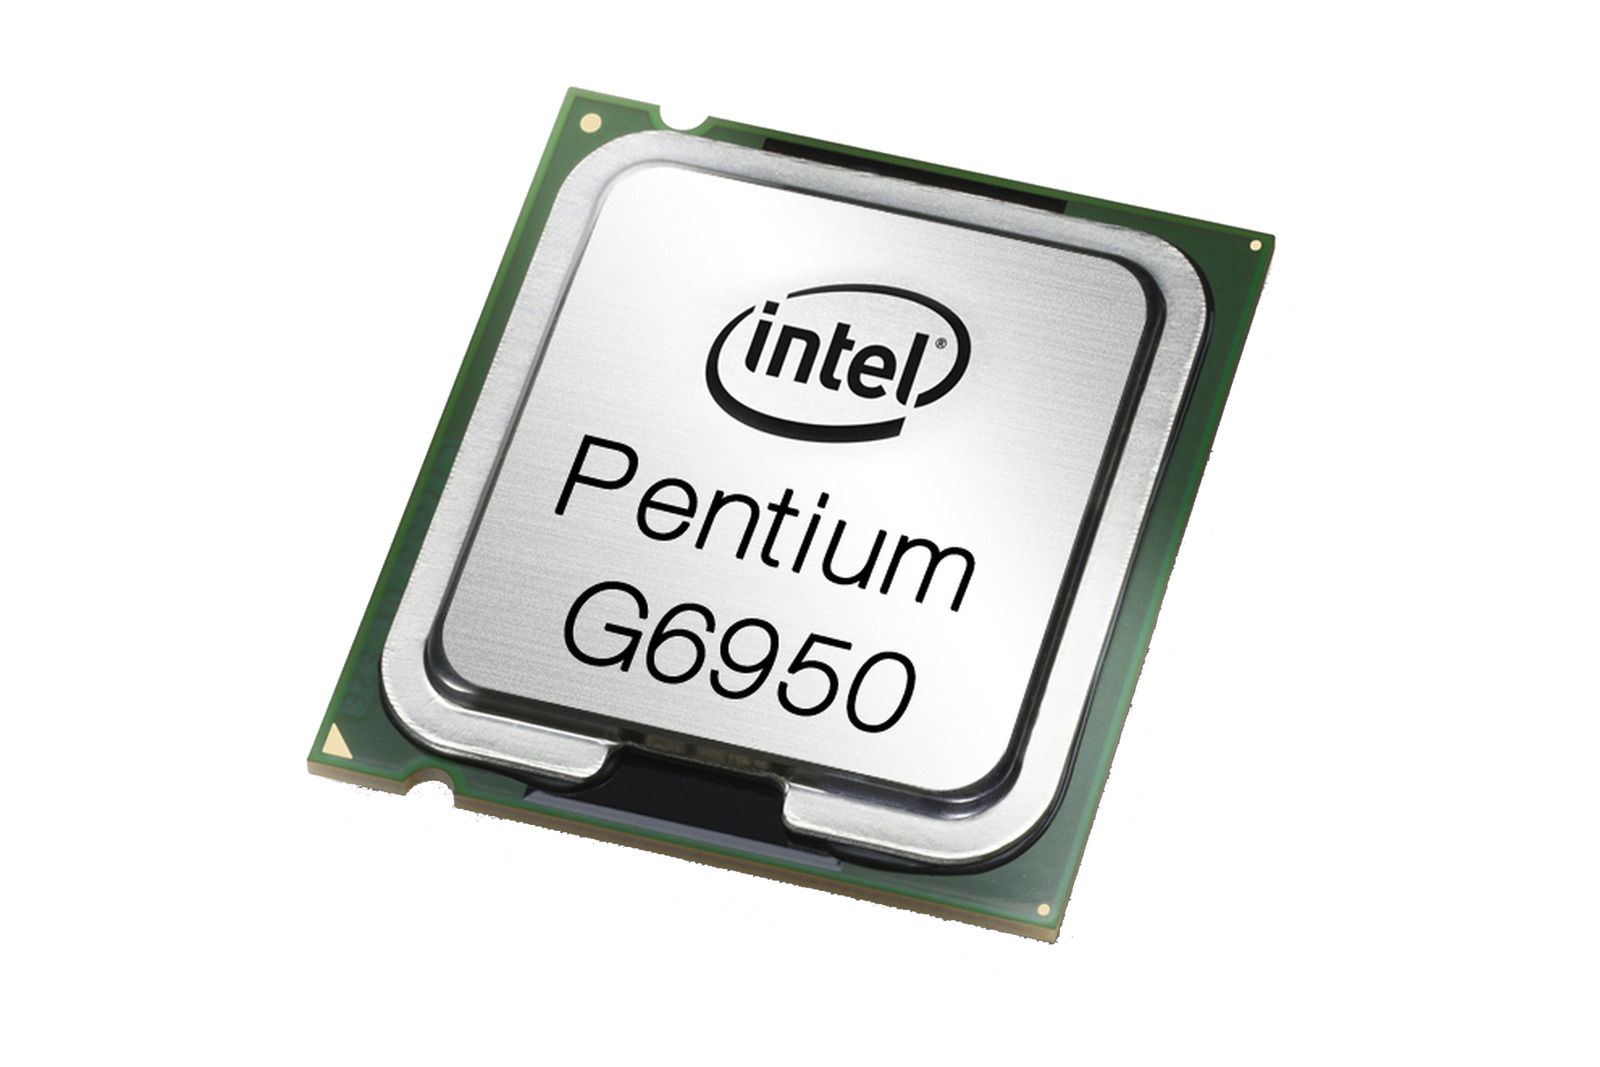 Processor Intel Pentium Dual-Core G6950 2.8GHz 3MB FCLGA1156